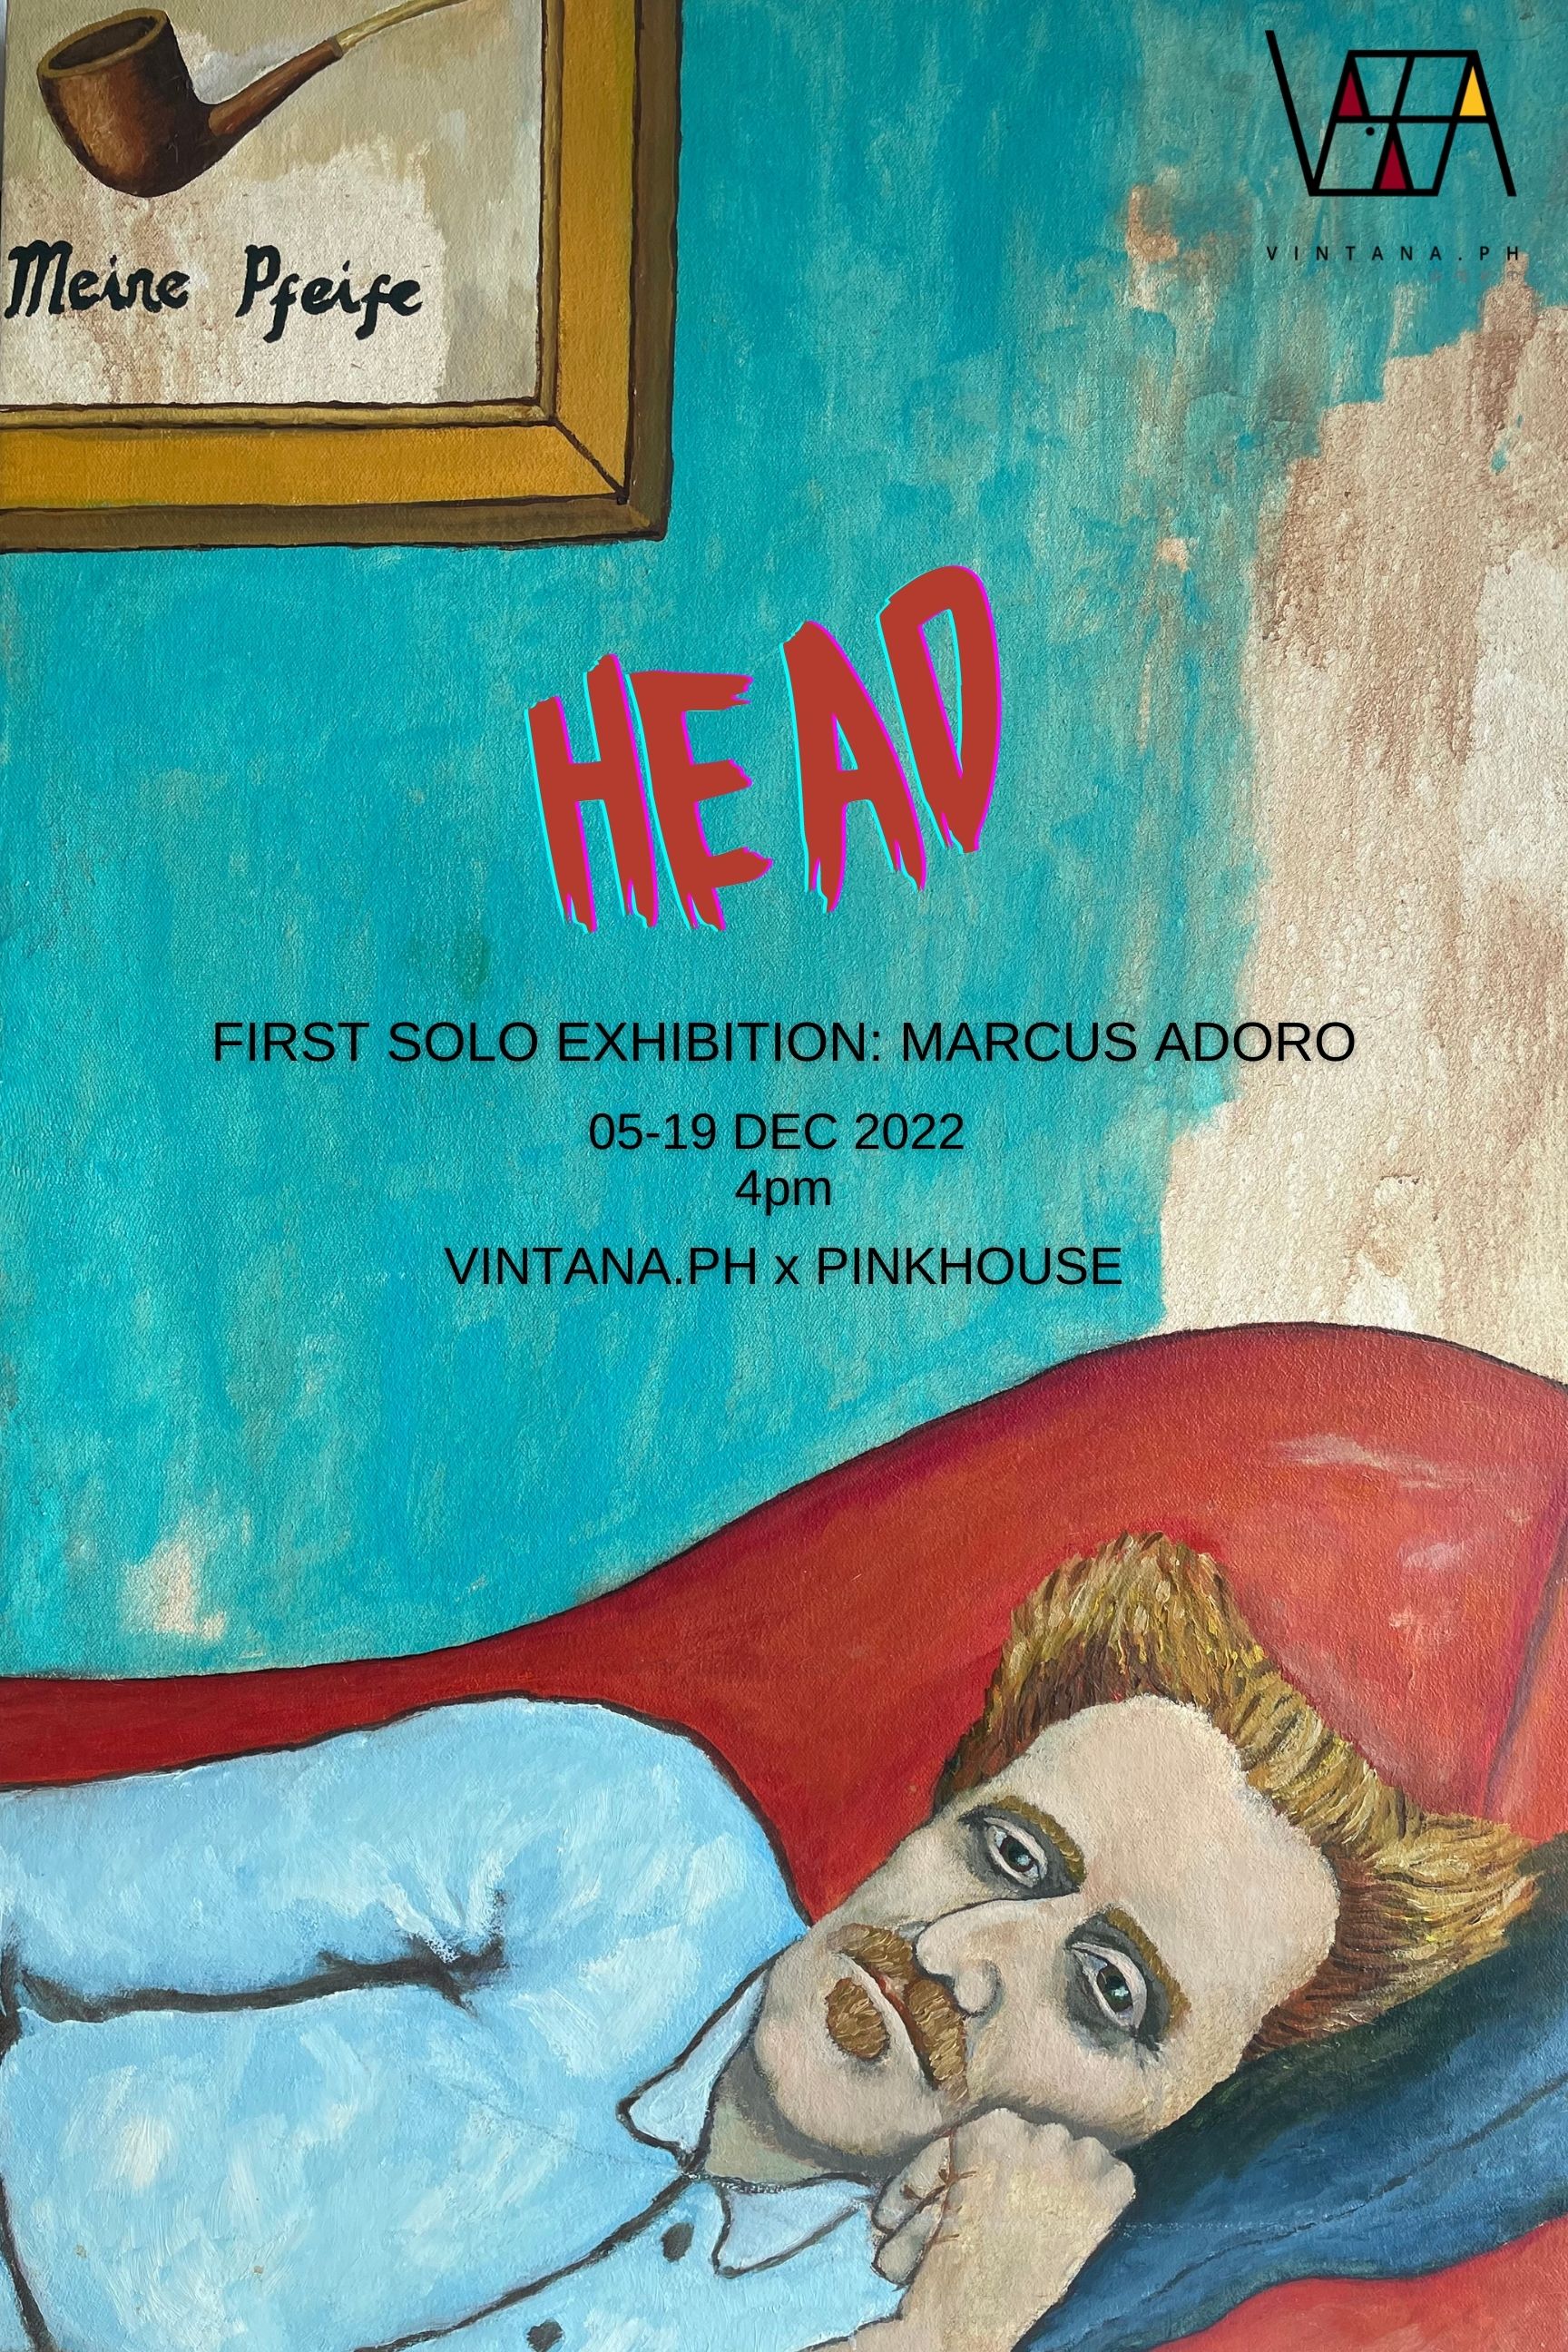 "HEAD" A First Solo Exhibition: Marcus Adoro